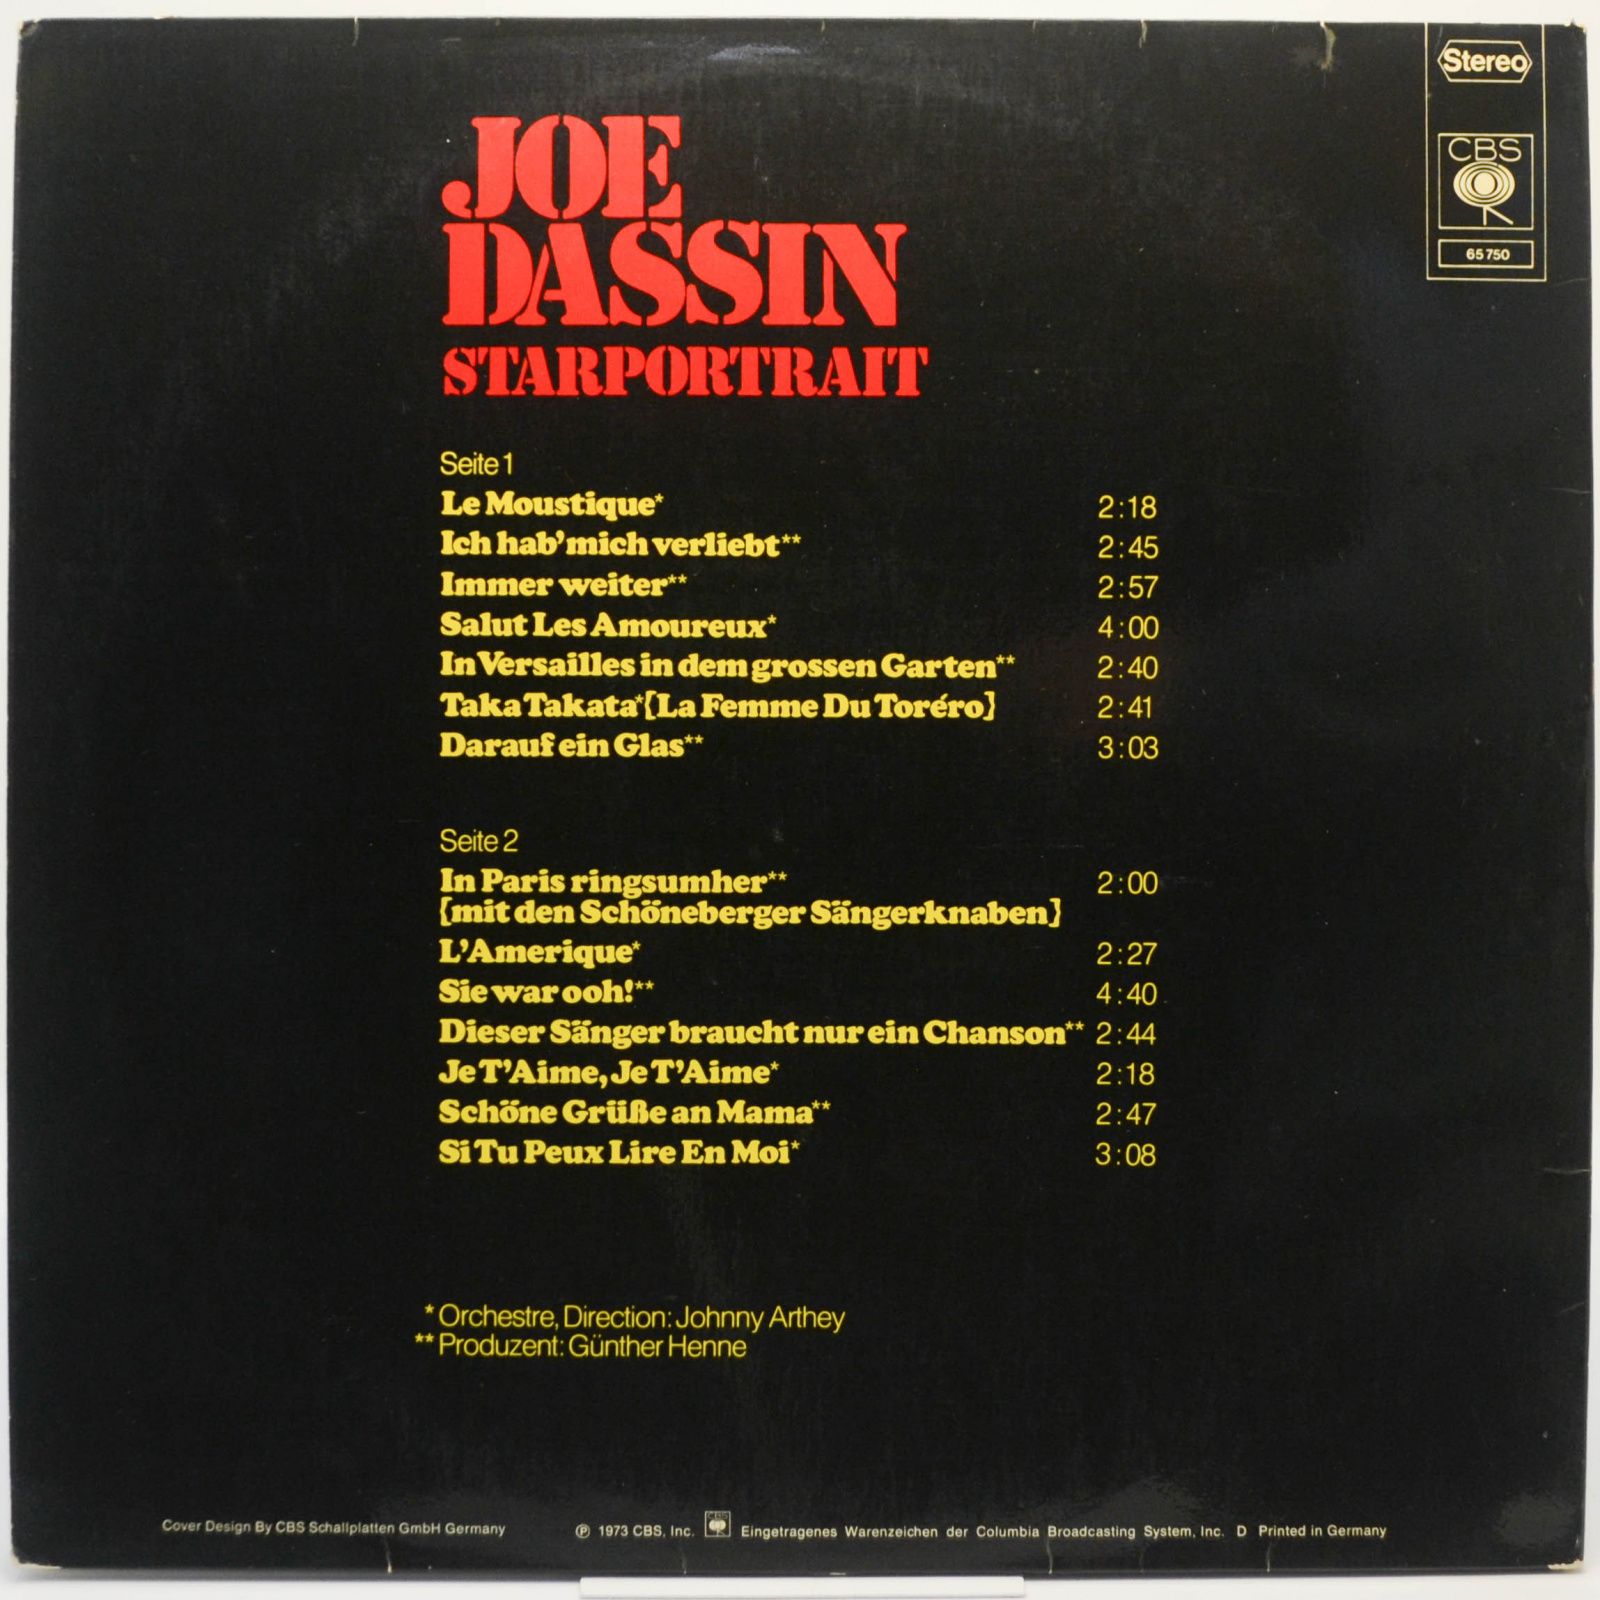 Joe Dassin — Starportrait, 1973